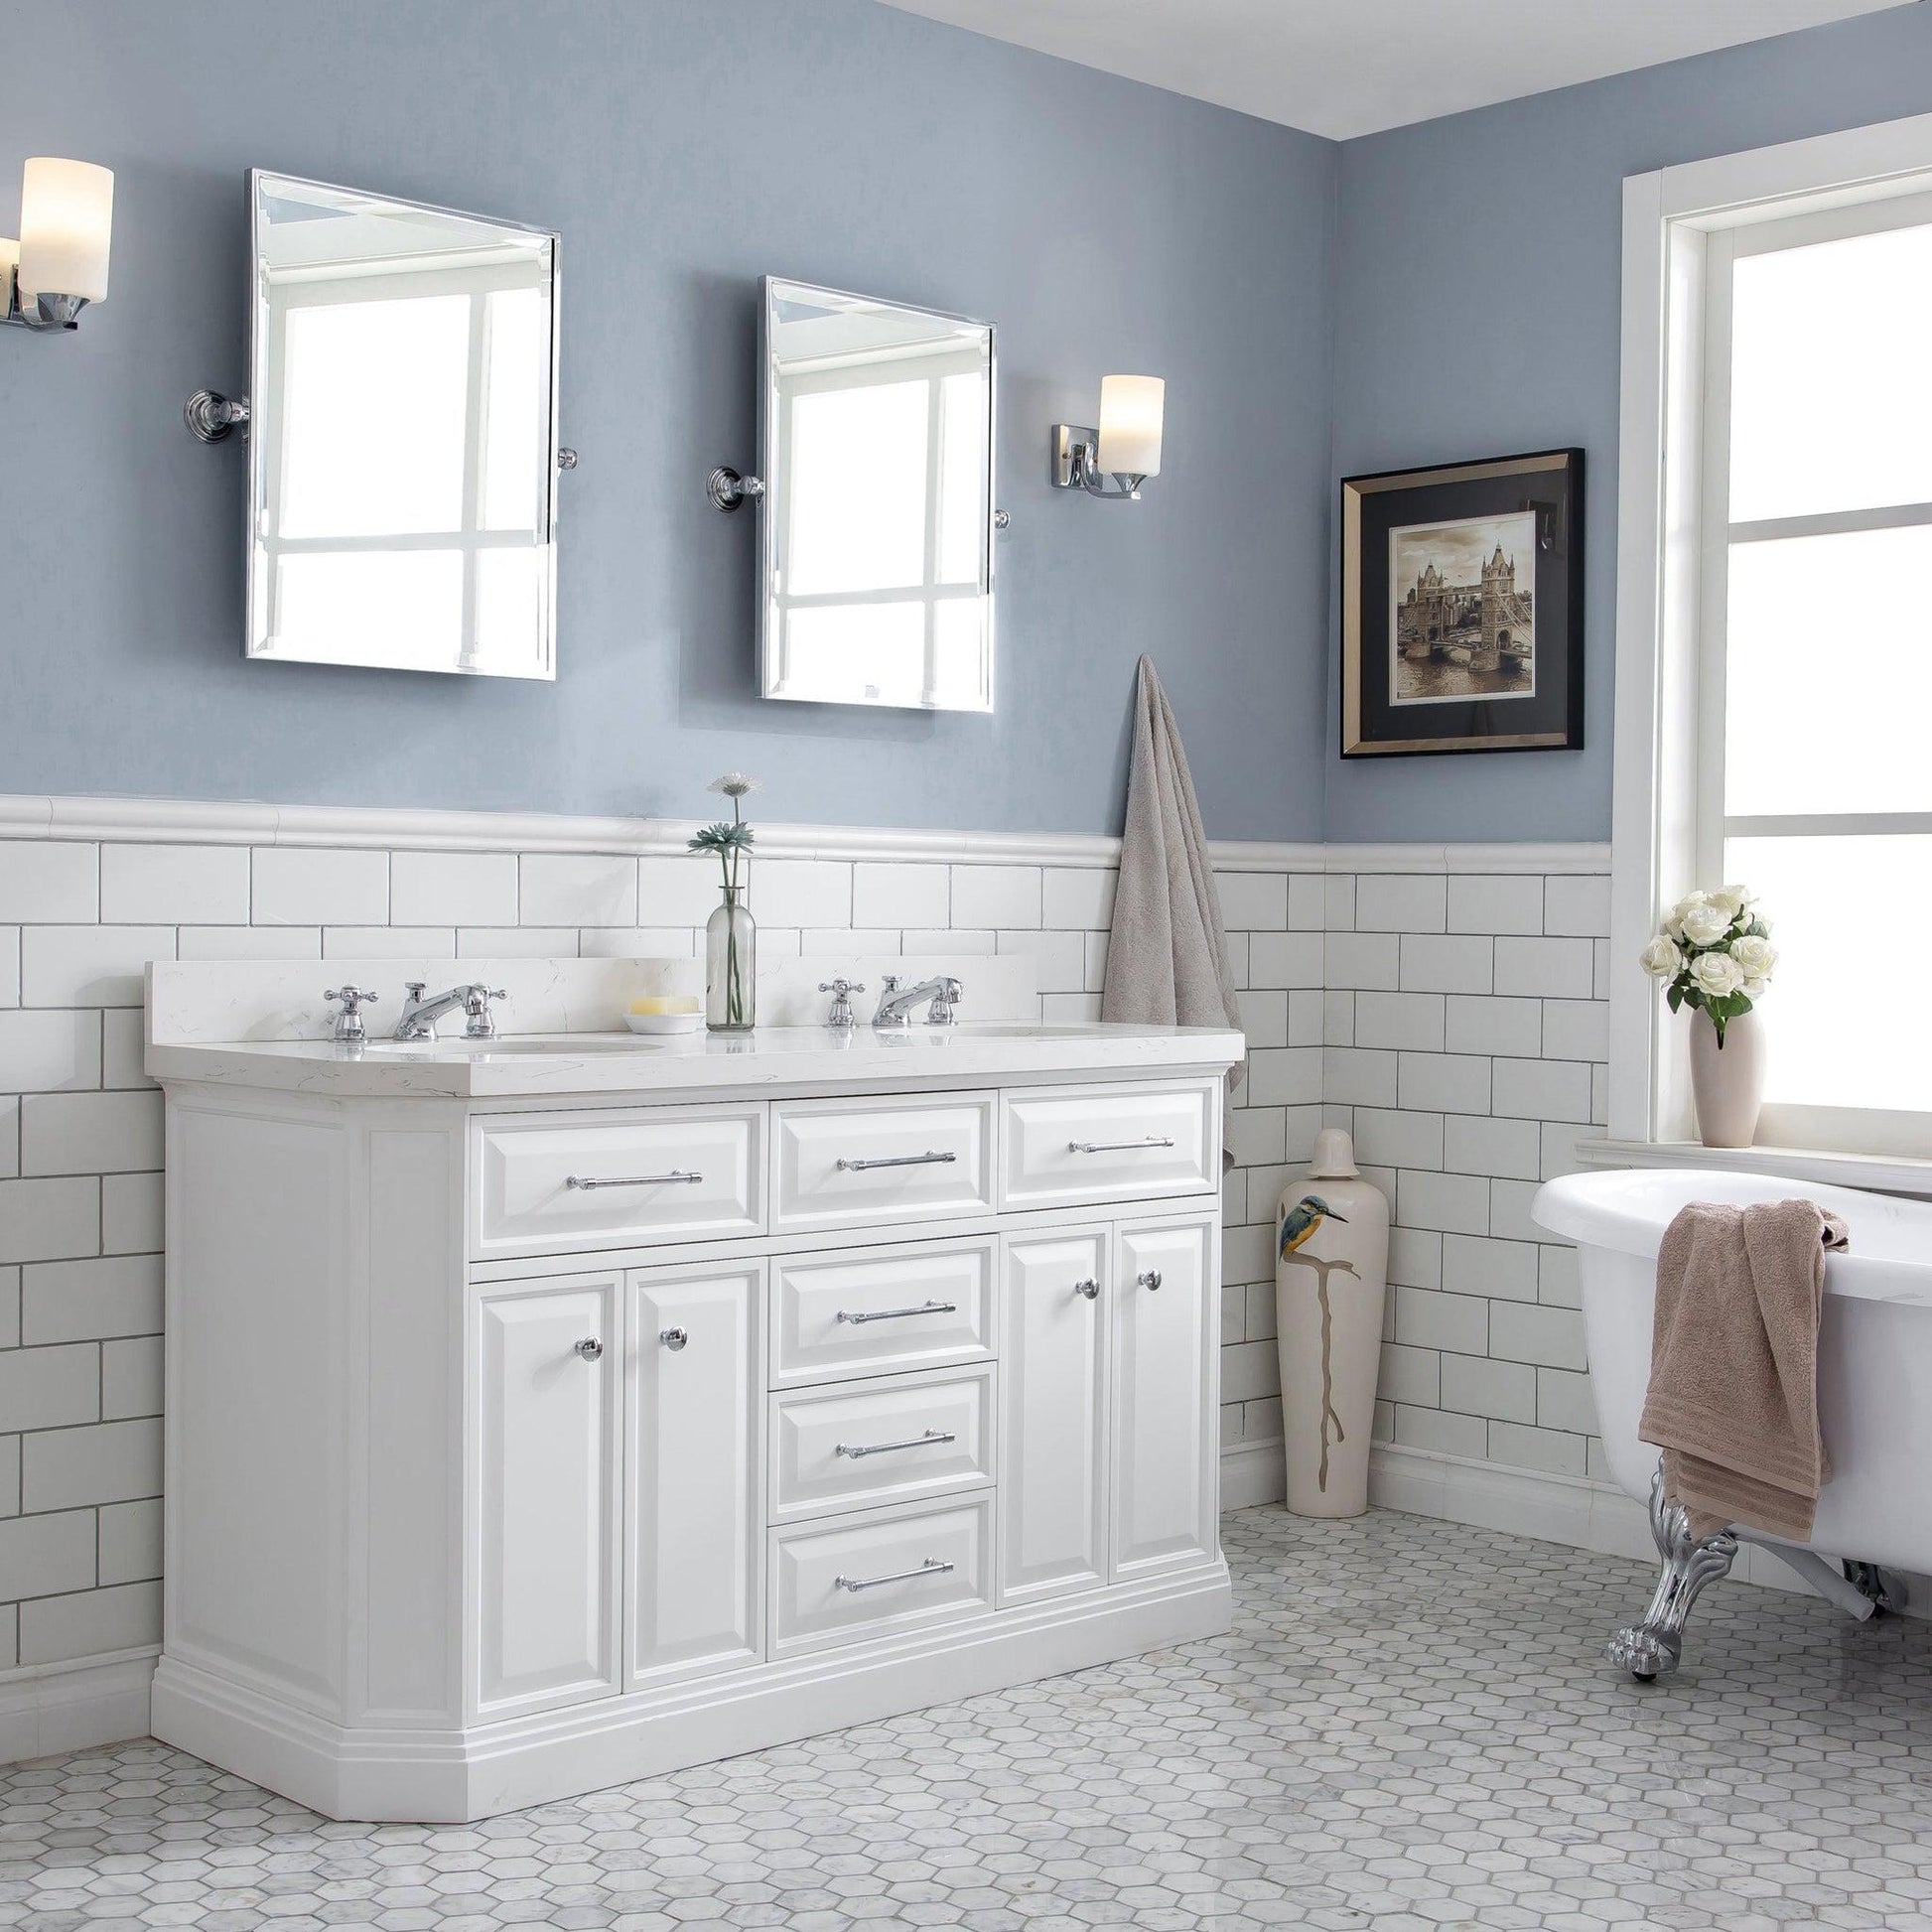 Water Creation Palace 60" Quartz Carrara Pure White Bathroom Vanity Set With Hardware, Mirror in Chrome Finish